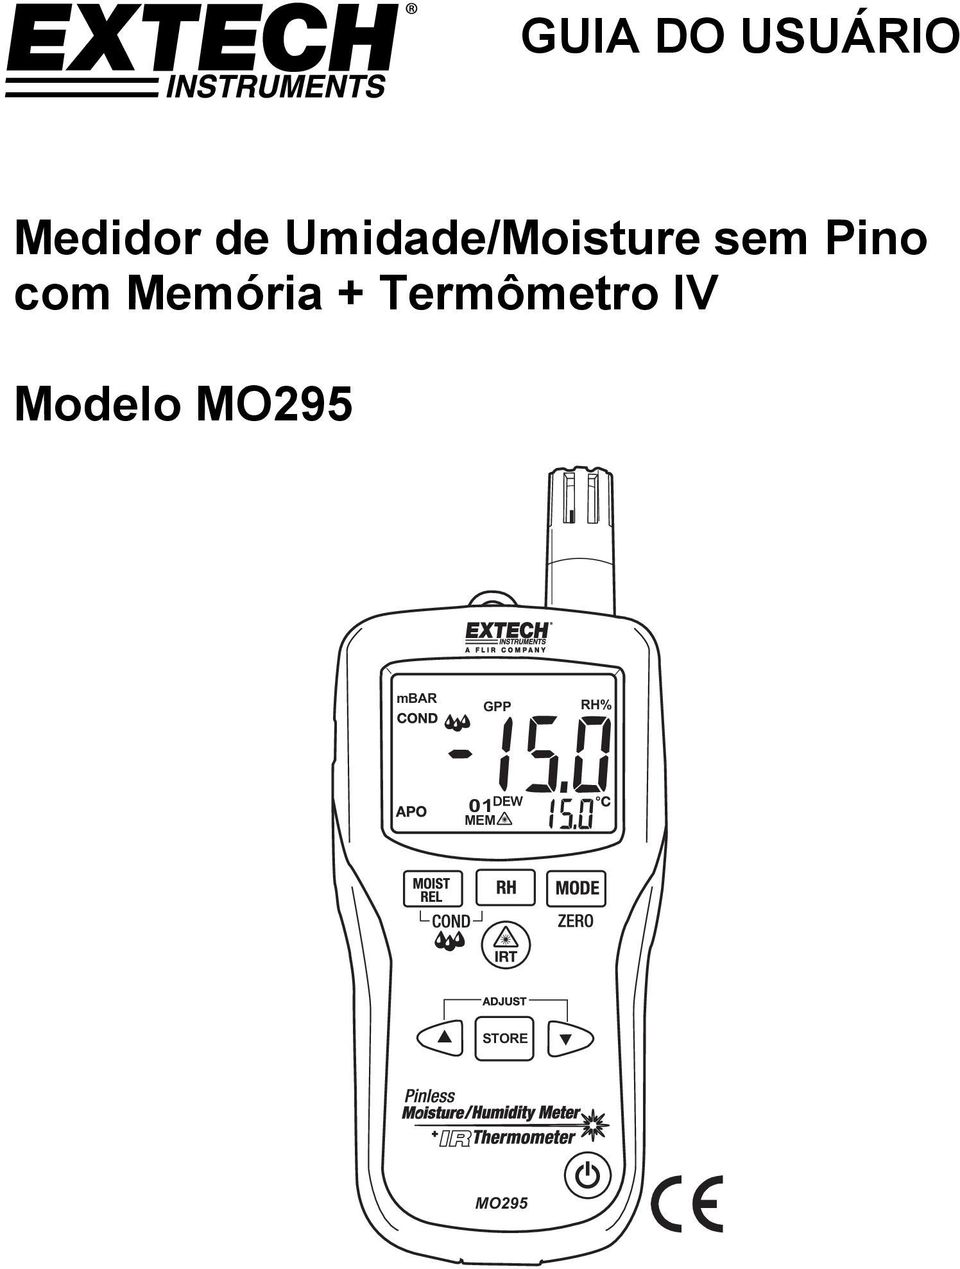 Memória + Termômetro IV Modelo